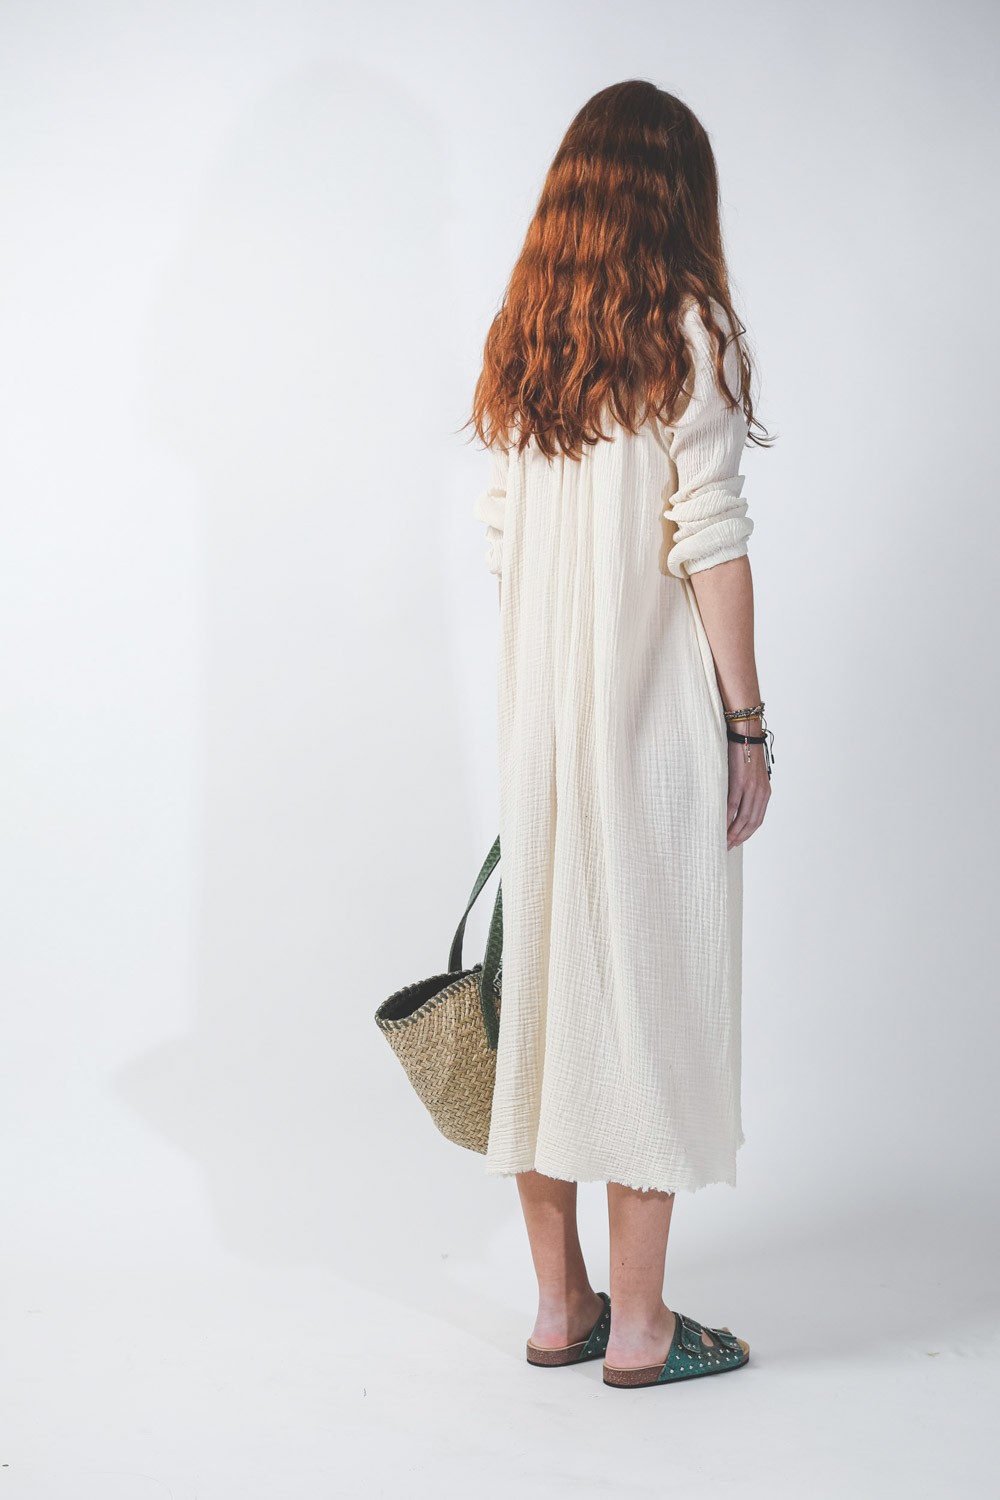 Image du produit Raquel Allegra Serenity Dress - Dirty White  - porté